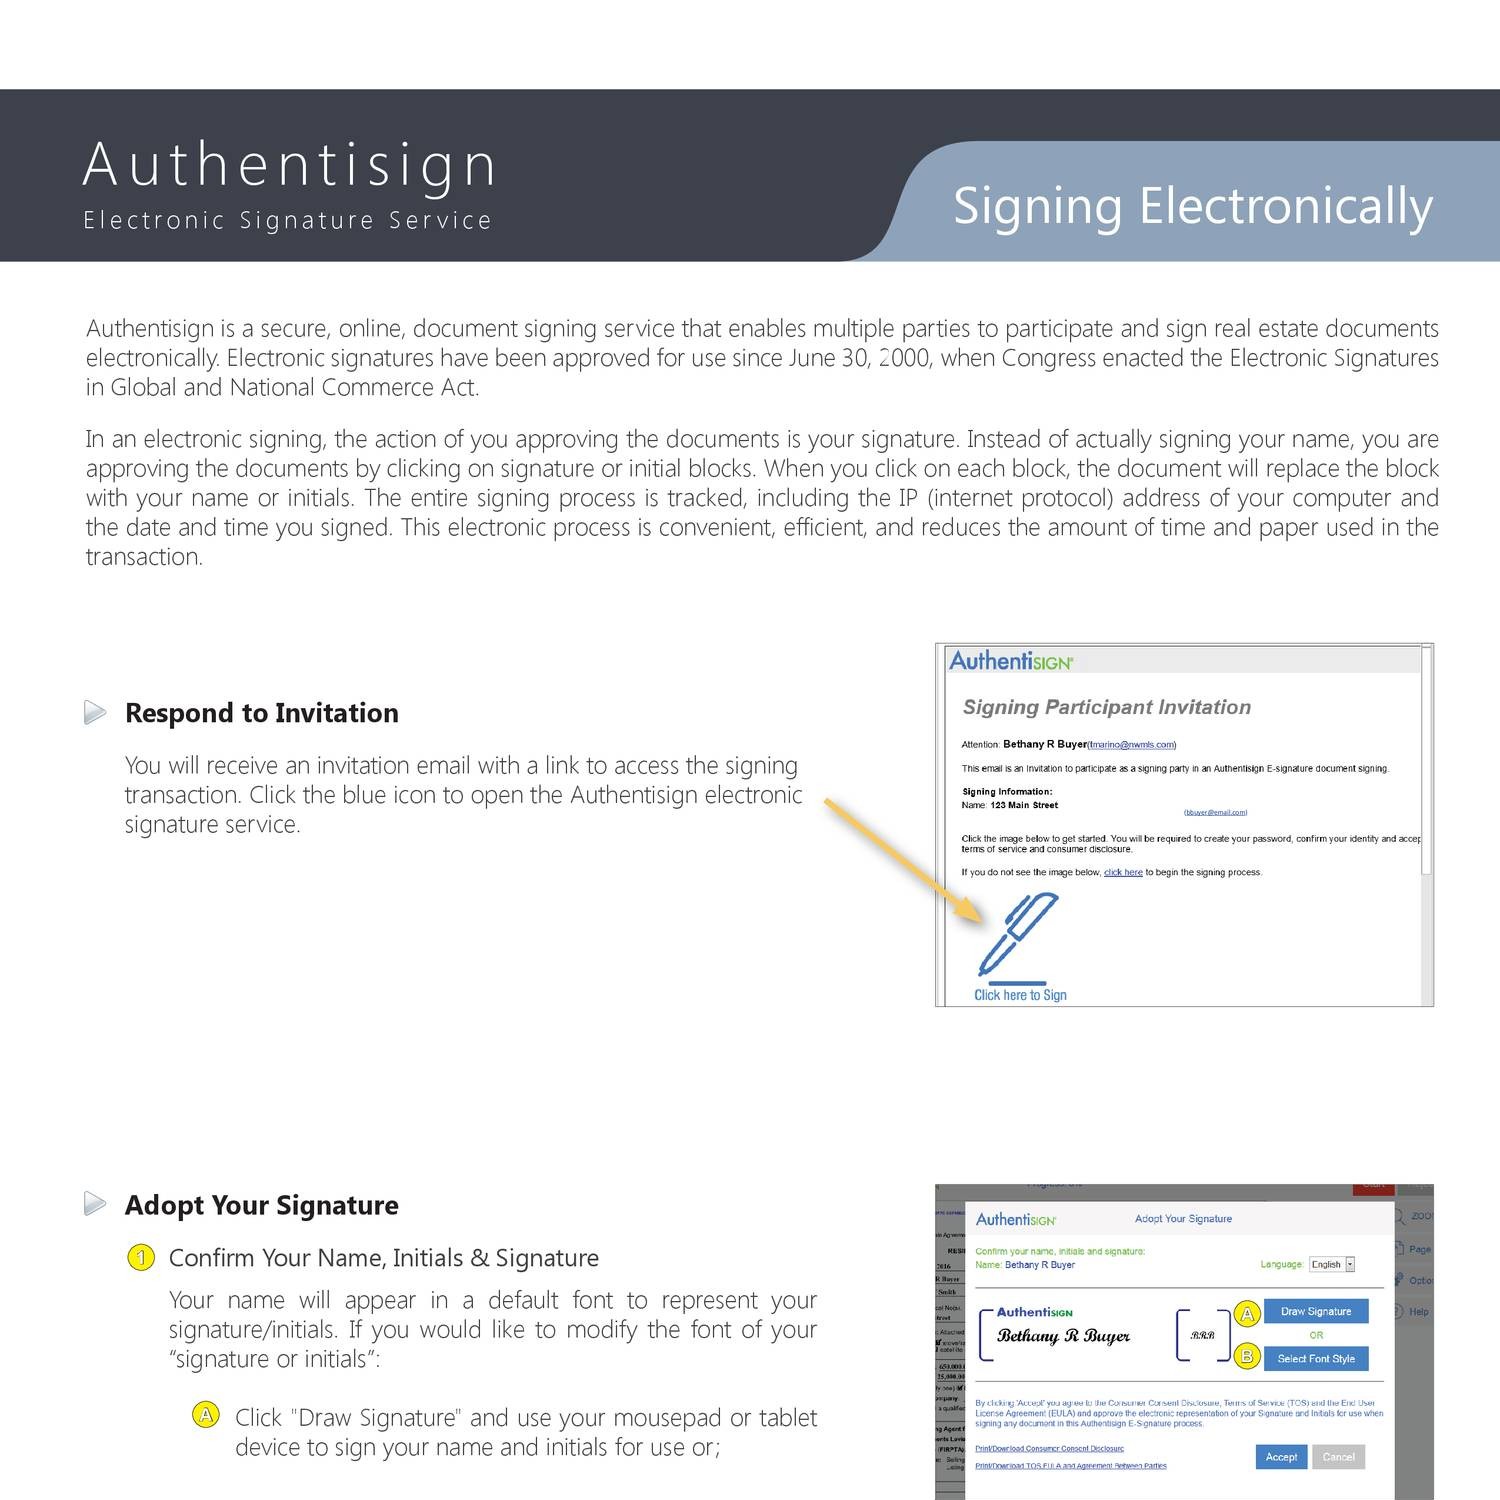 Authentisign_Client Instructions.pdf | DocDroid